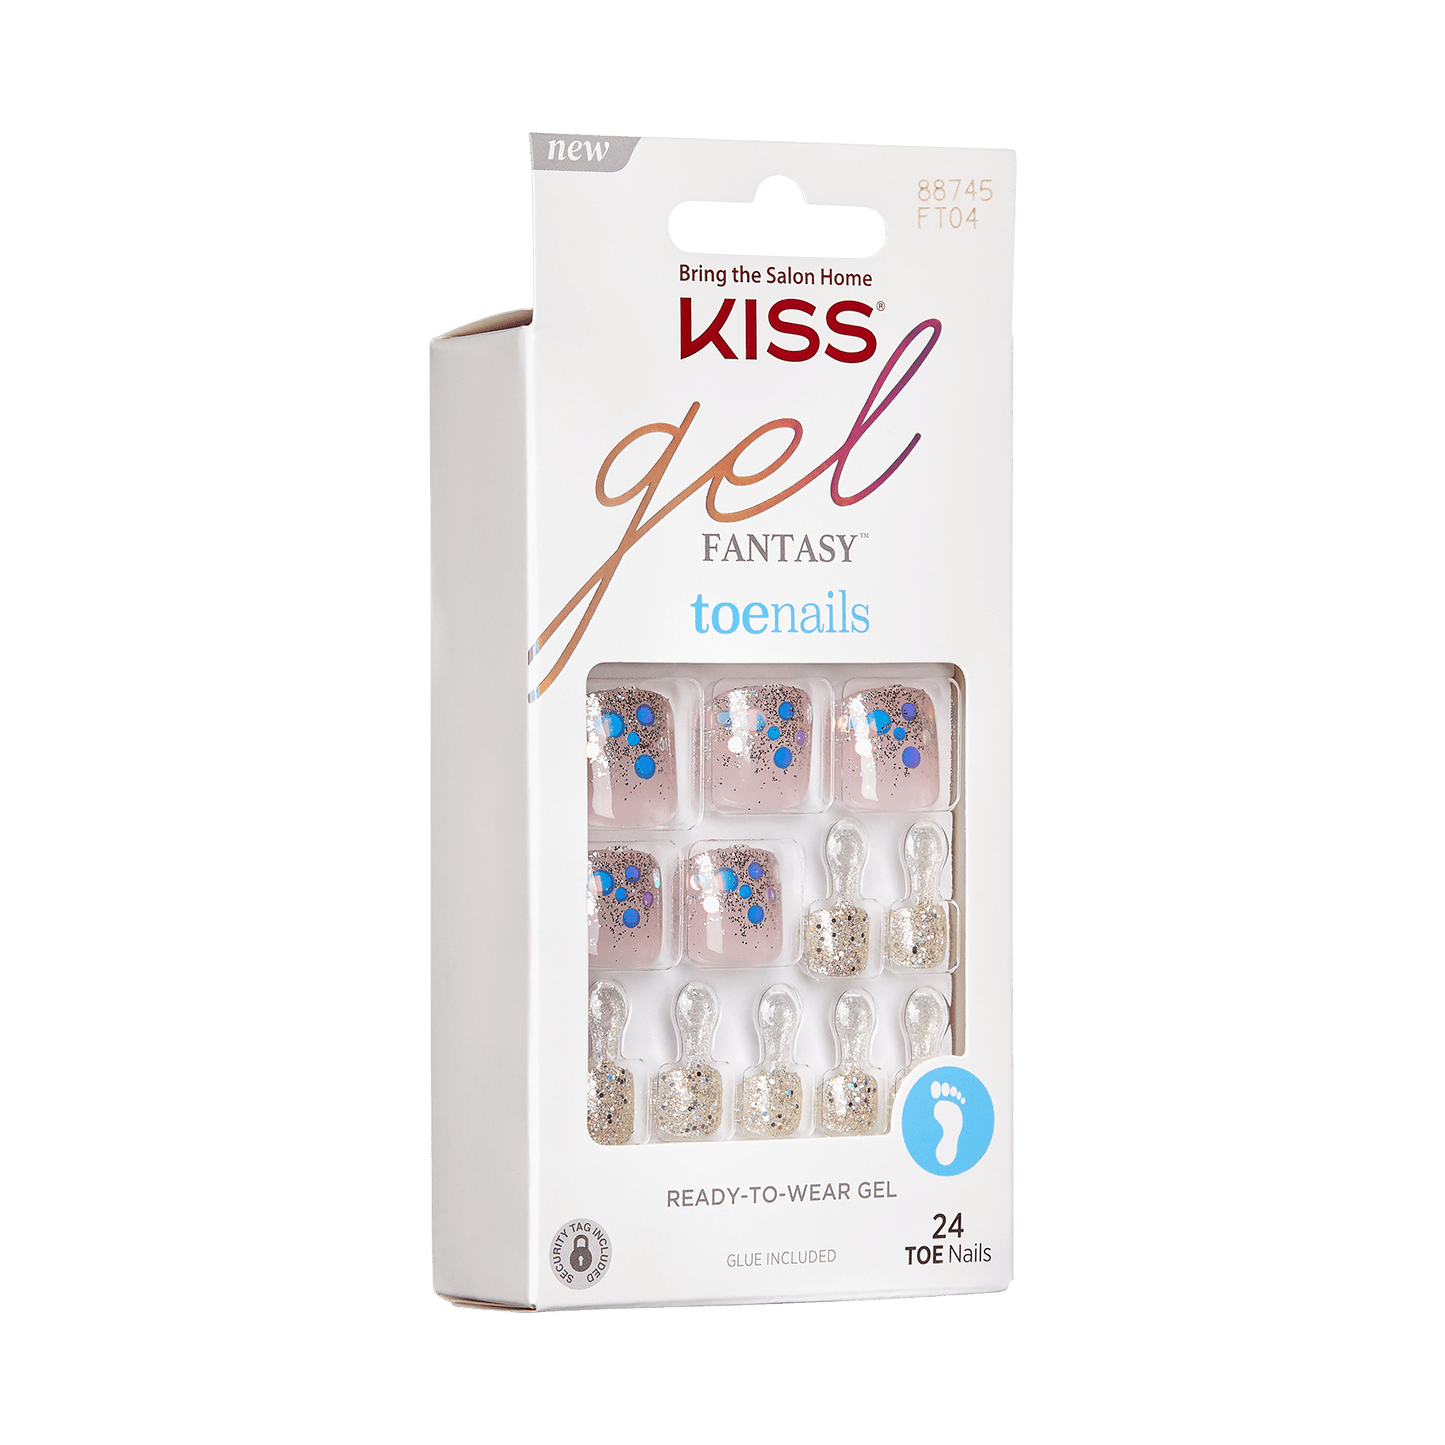 KISS Gel Fantasy Ready-To-Wear Fake Toenails #FT04